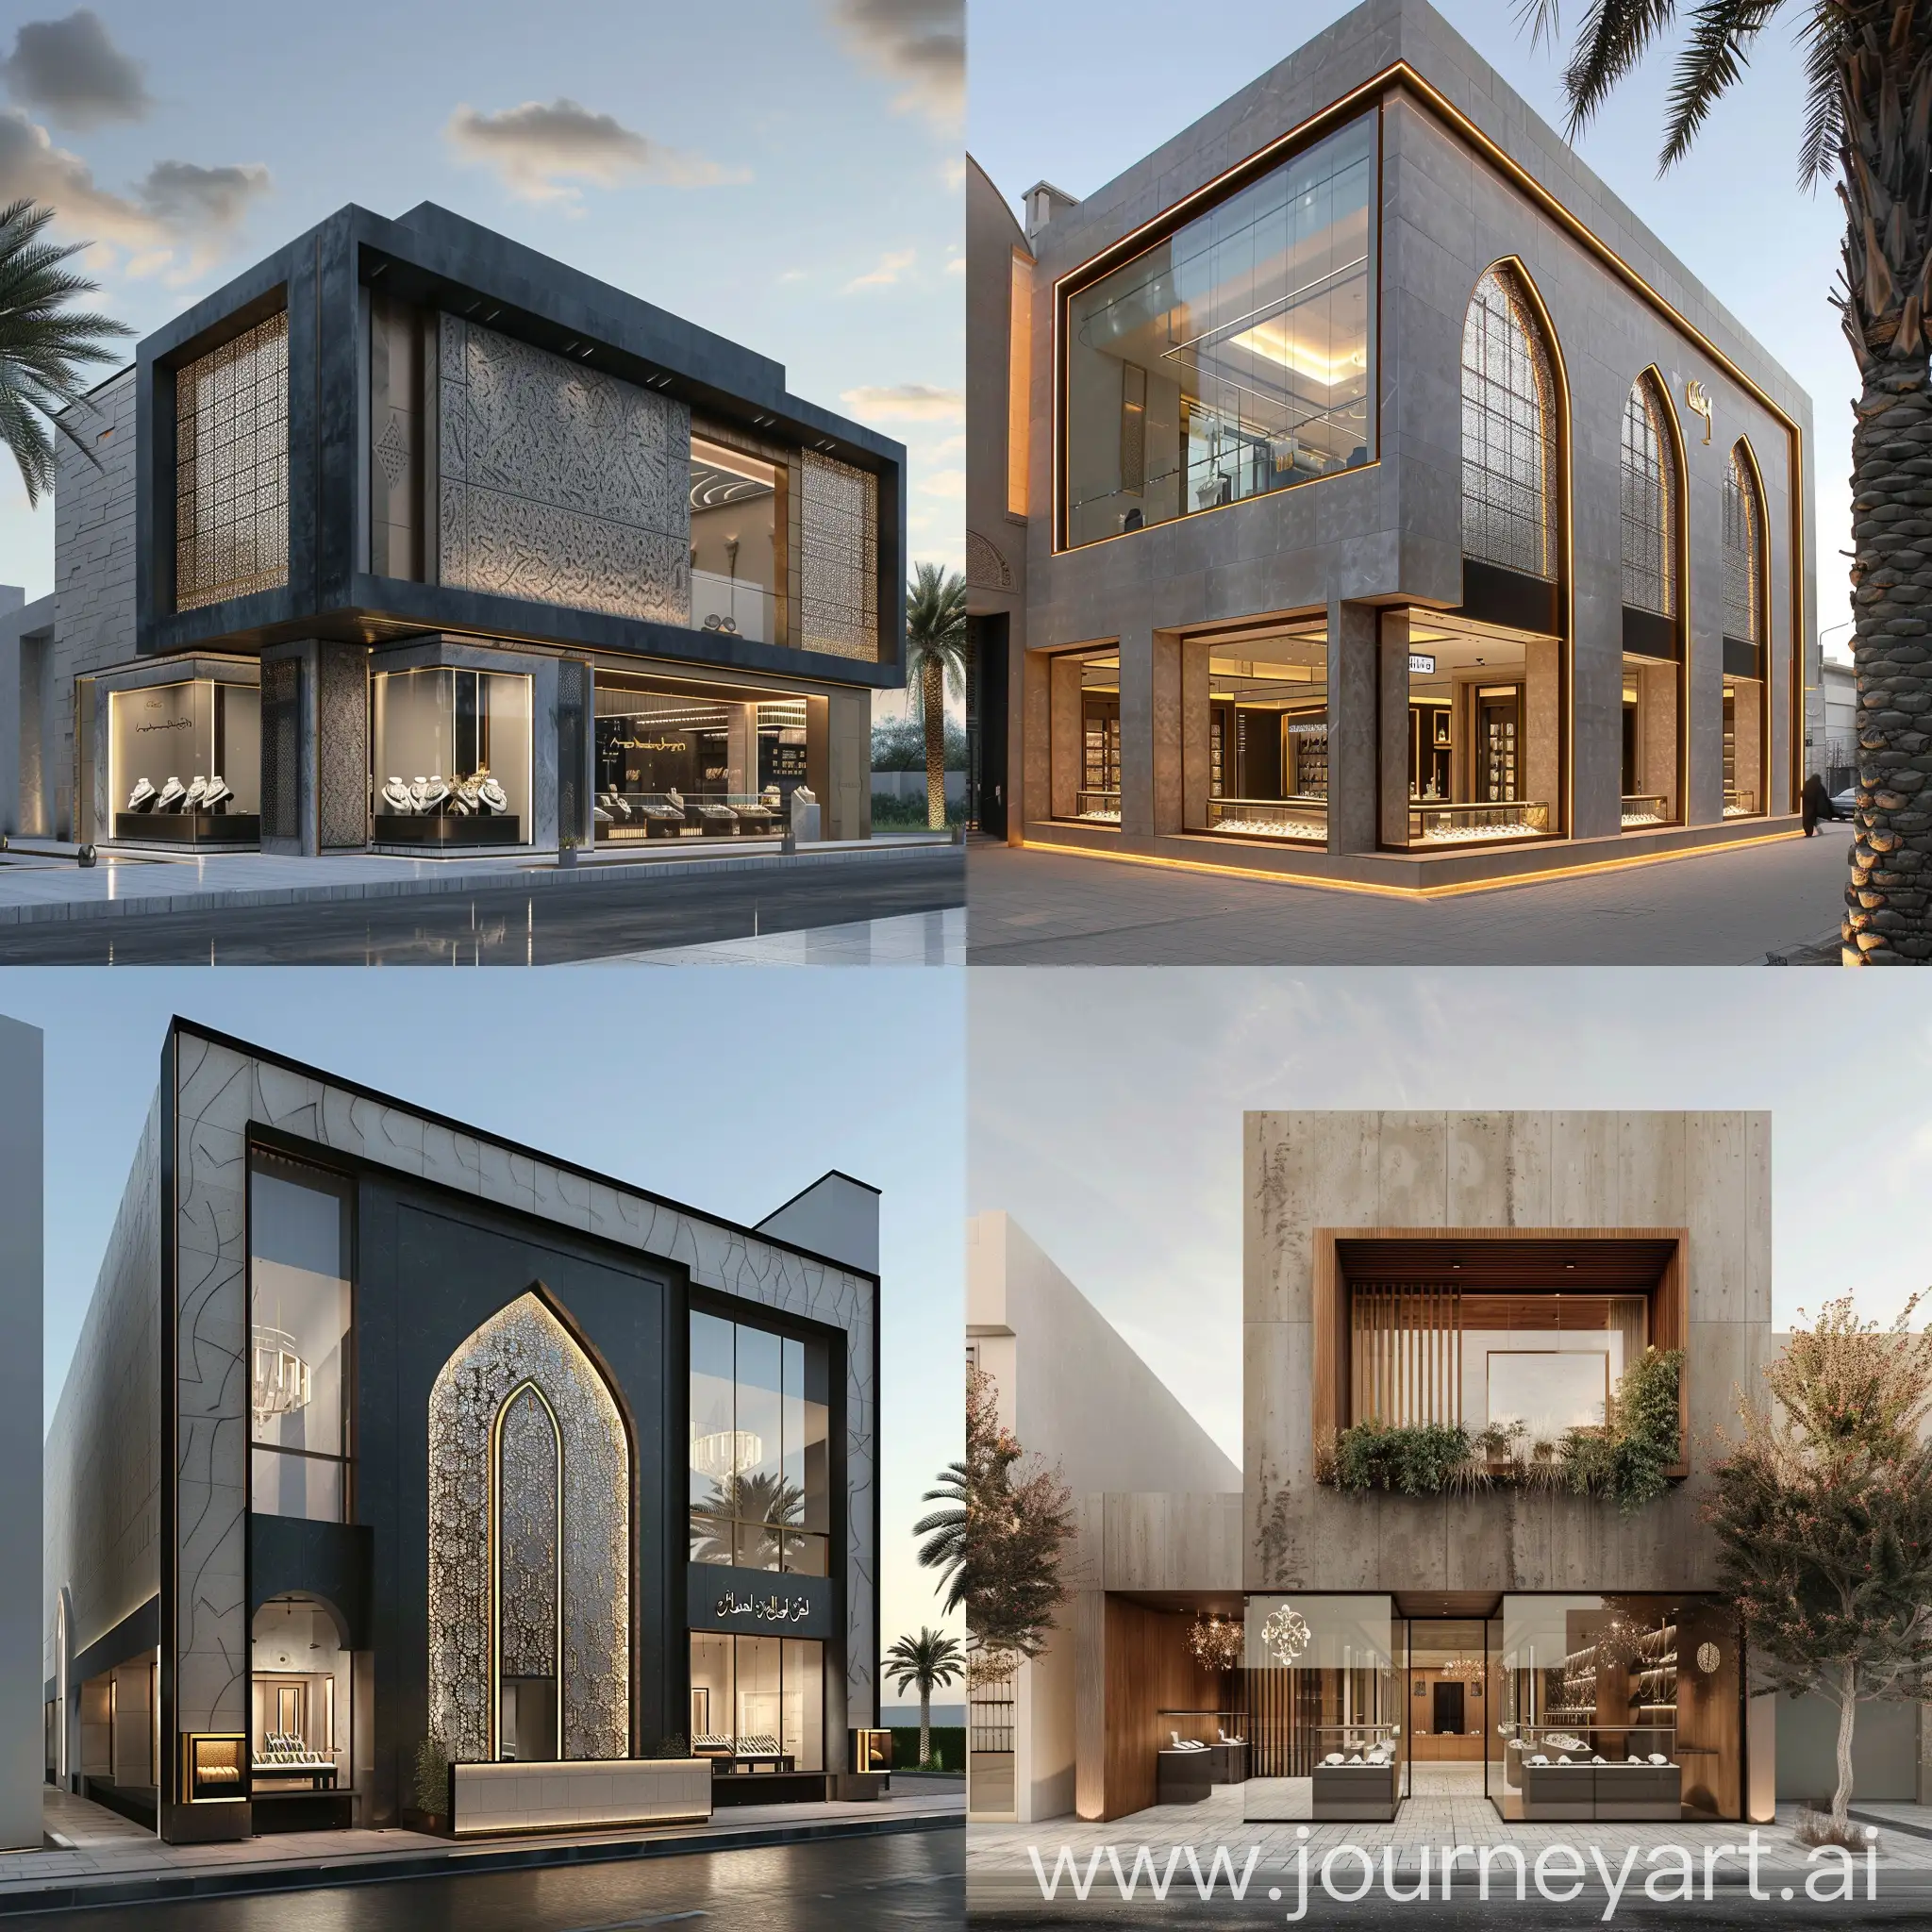 Modern-Arabian-Hijazi-Style-Architecture-for-Jewelry-Stores